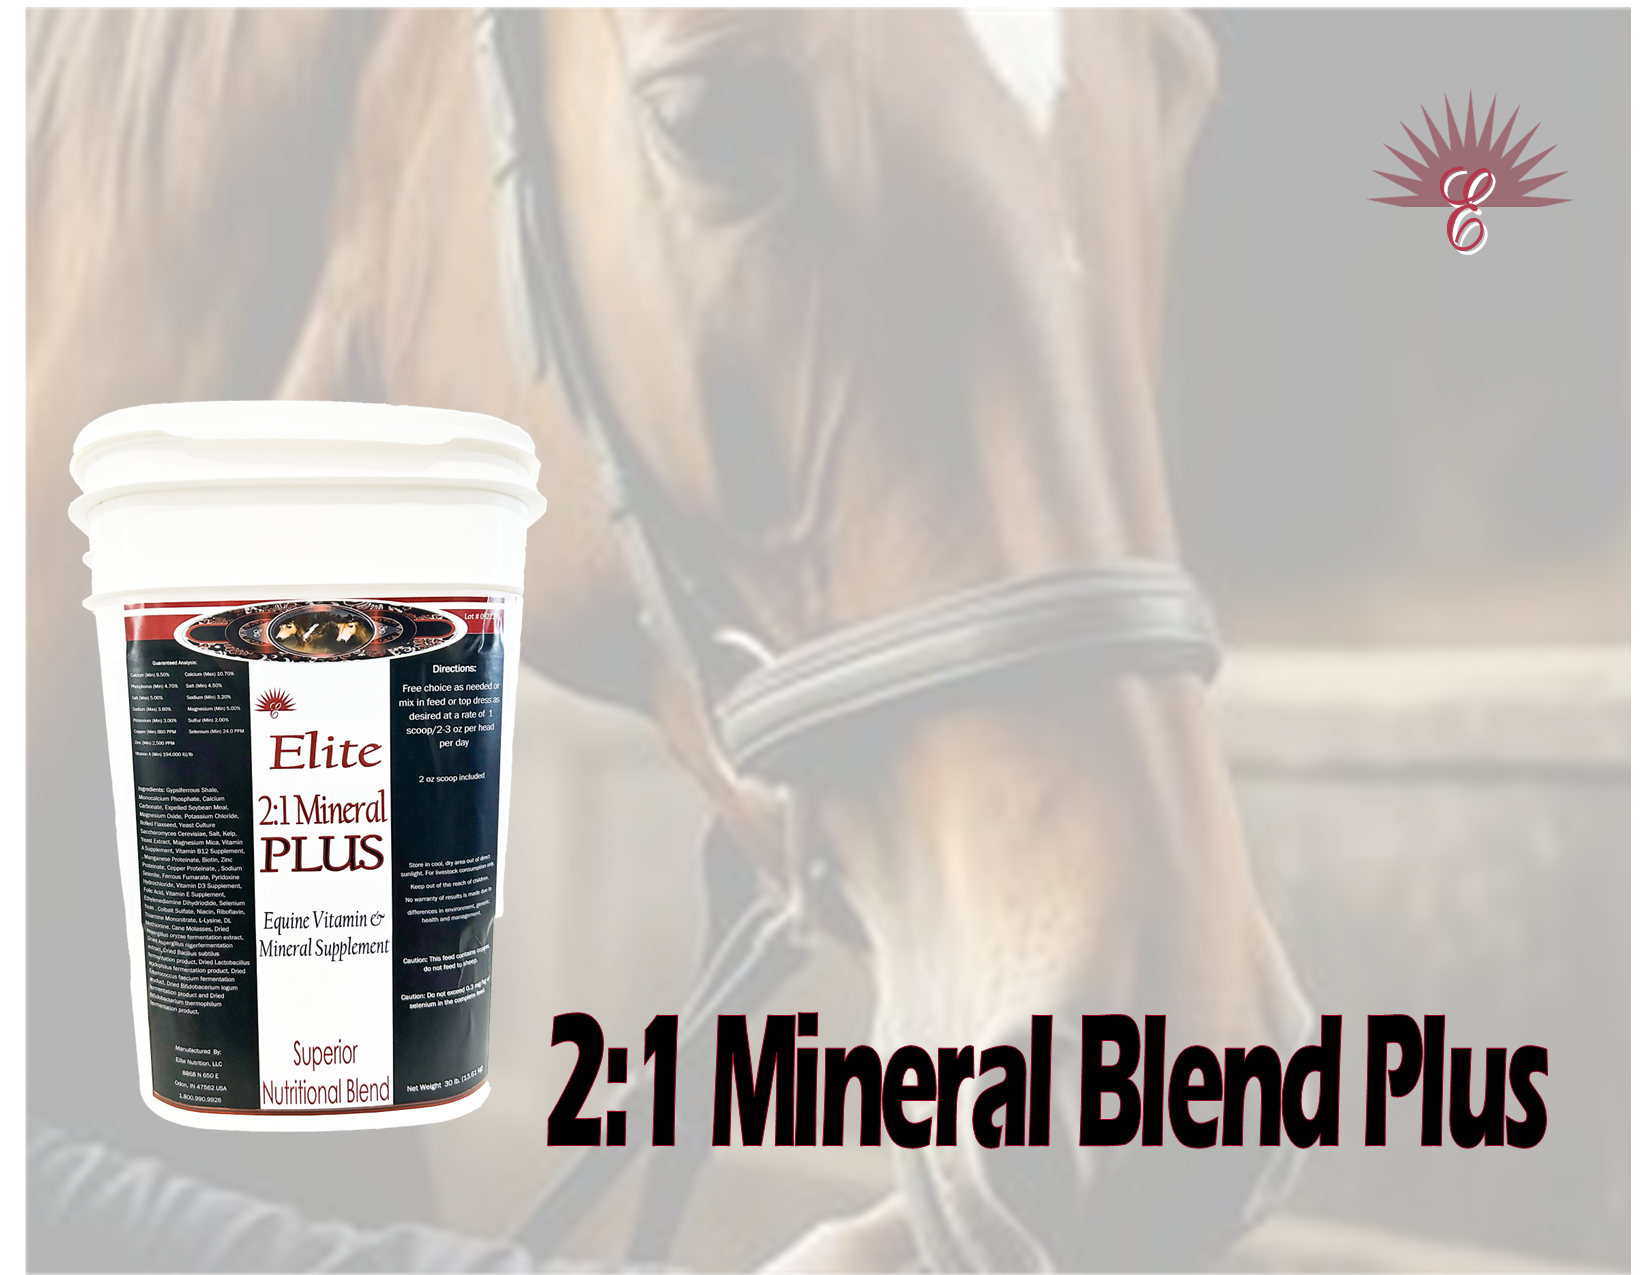 Elite 2:1 Mineral PLUS - Mineral Vitamin Blend for Equine